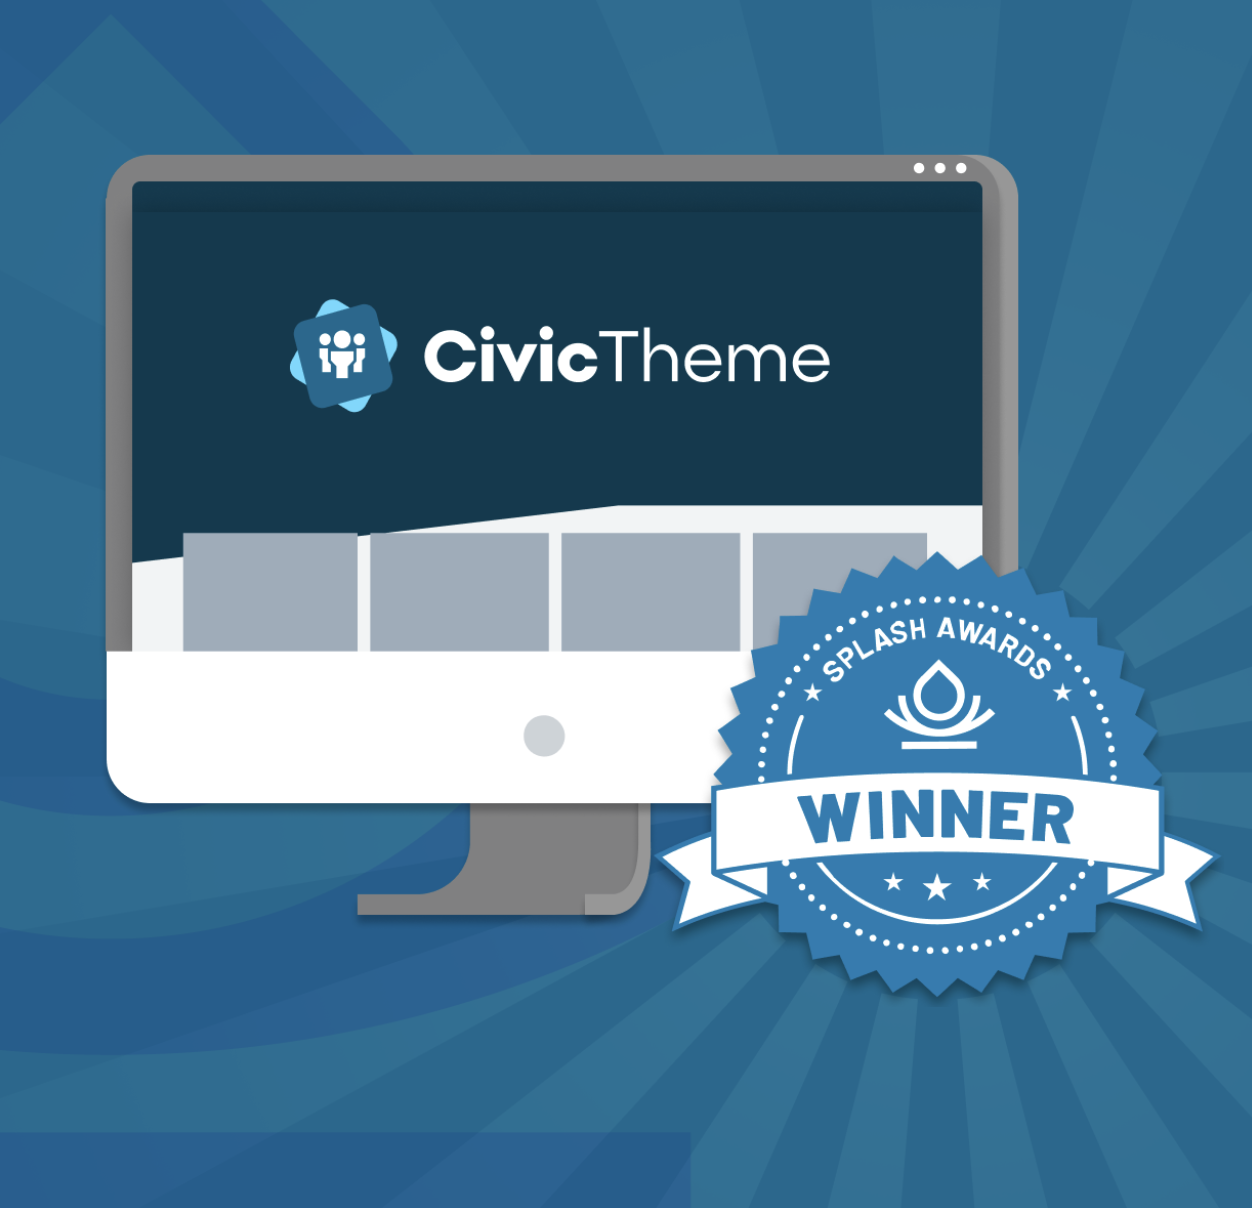 CivicTheme Splash Award Winner Graphic with monitor and badge